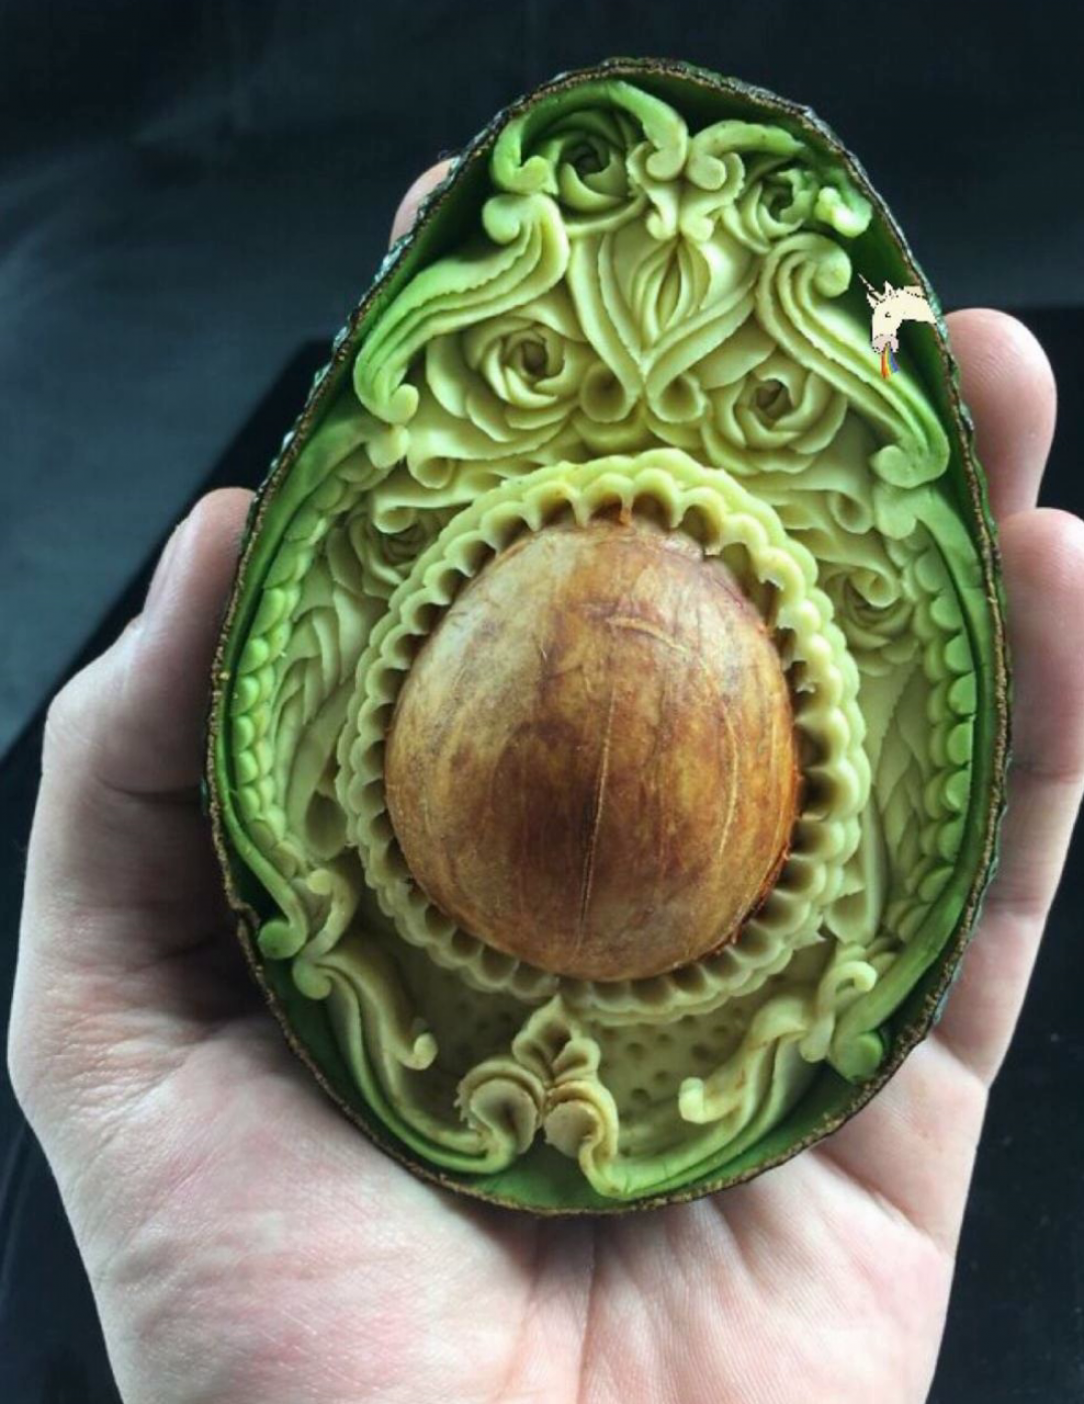 This avocado art